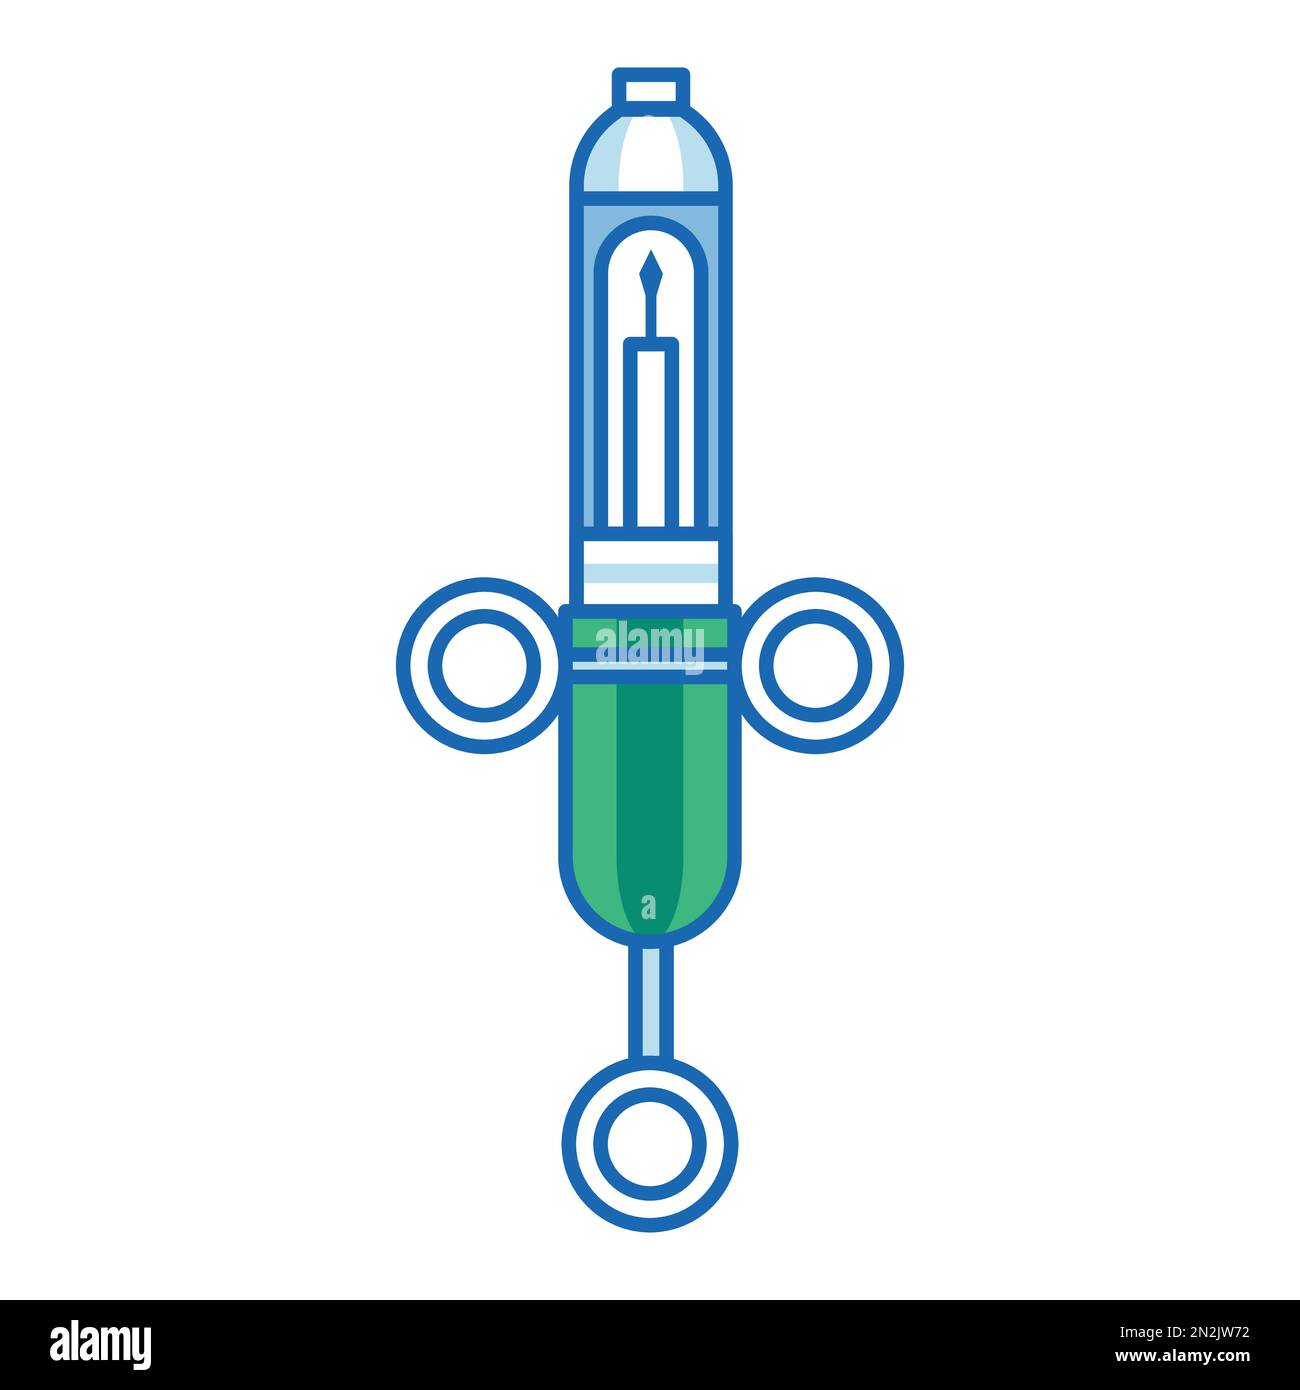 Dental Injection Syringe Illustration in Line Art Stock Vector